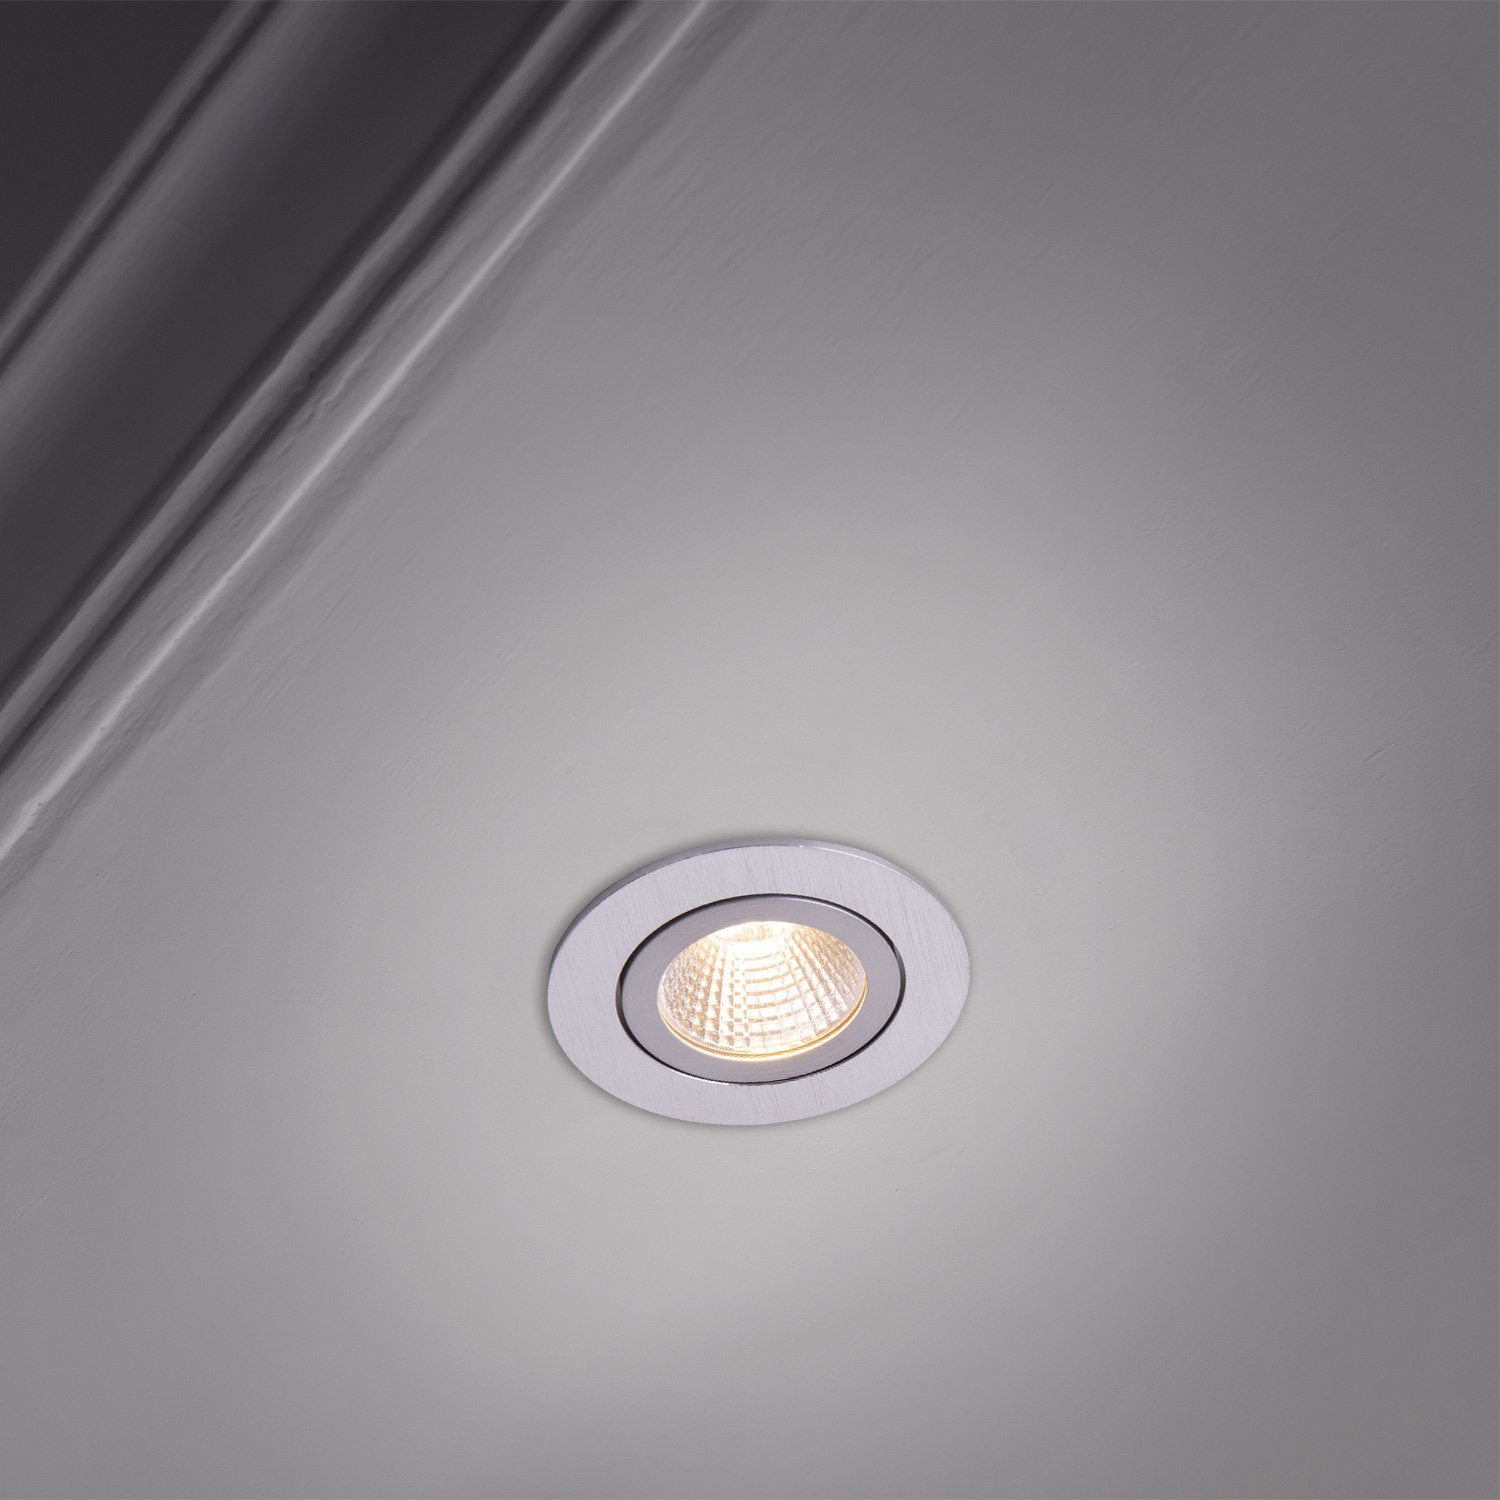 Paco Home Einbauleuchte LED Einbaustrahler Warmweiß, Schwenkbar Rita, LED dimmbar LED Flach wechselbar, Spotlight Strahler